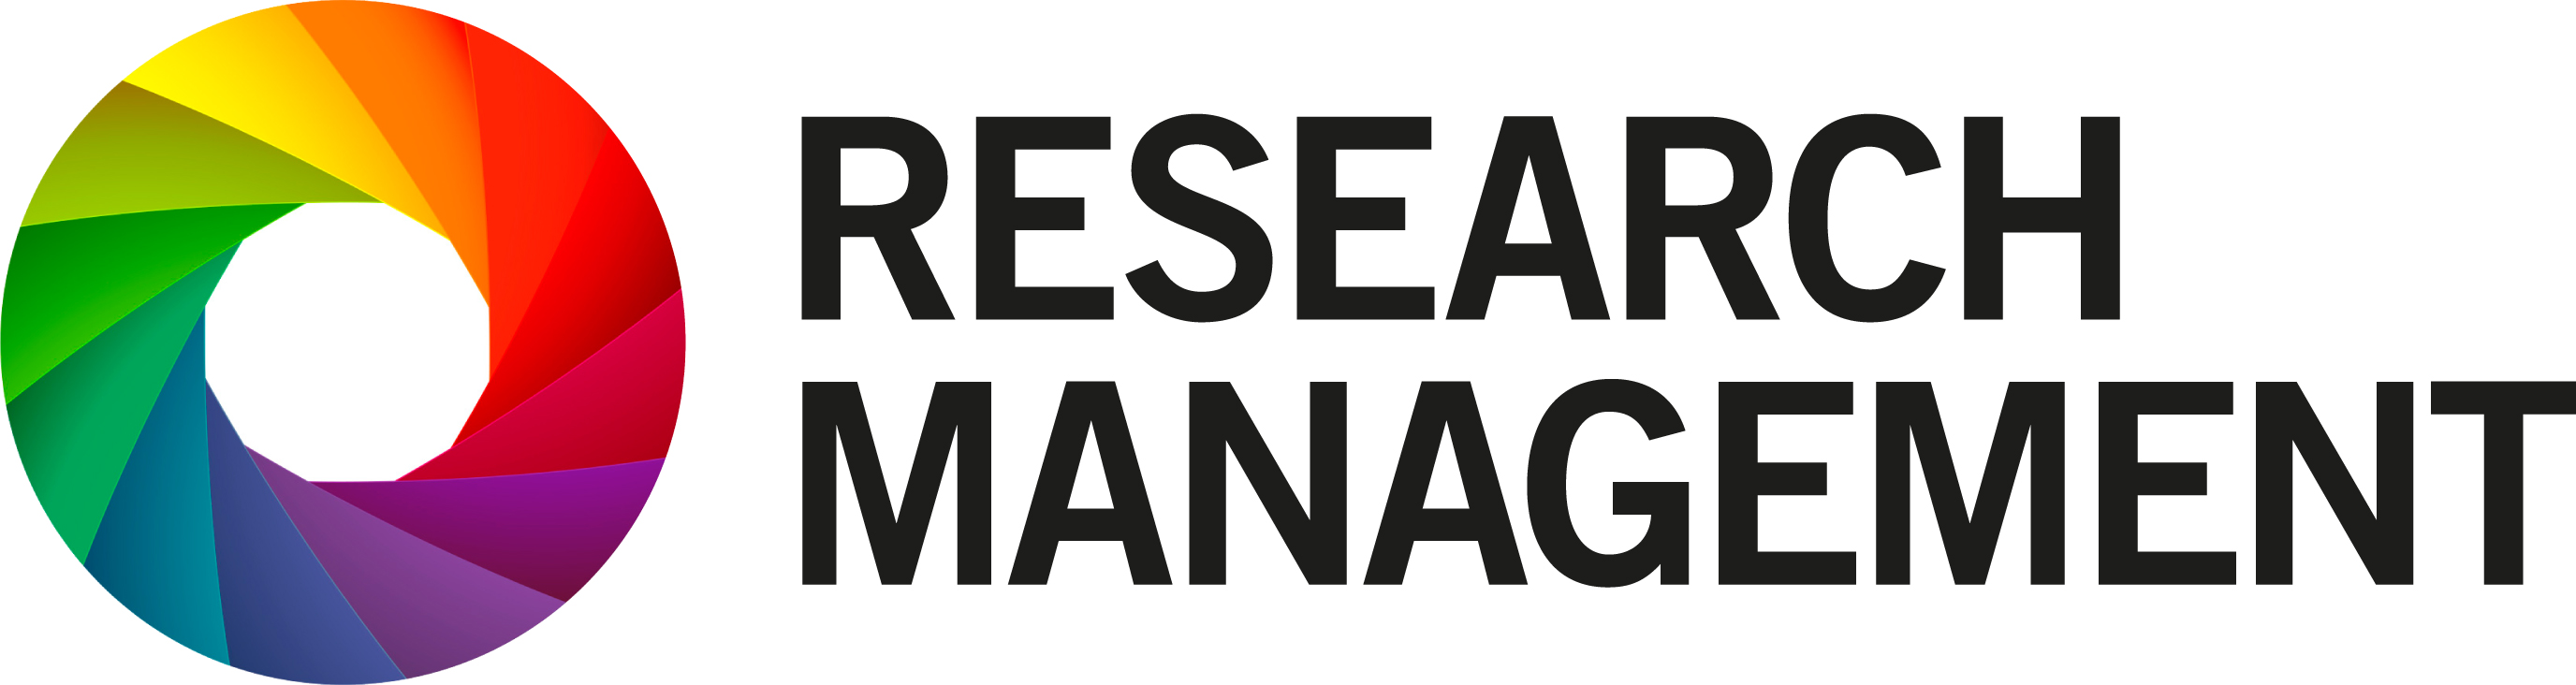 Research Management logo